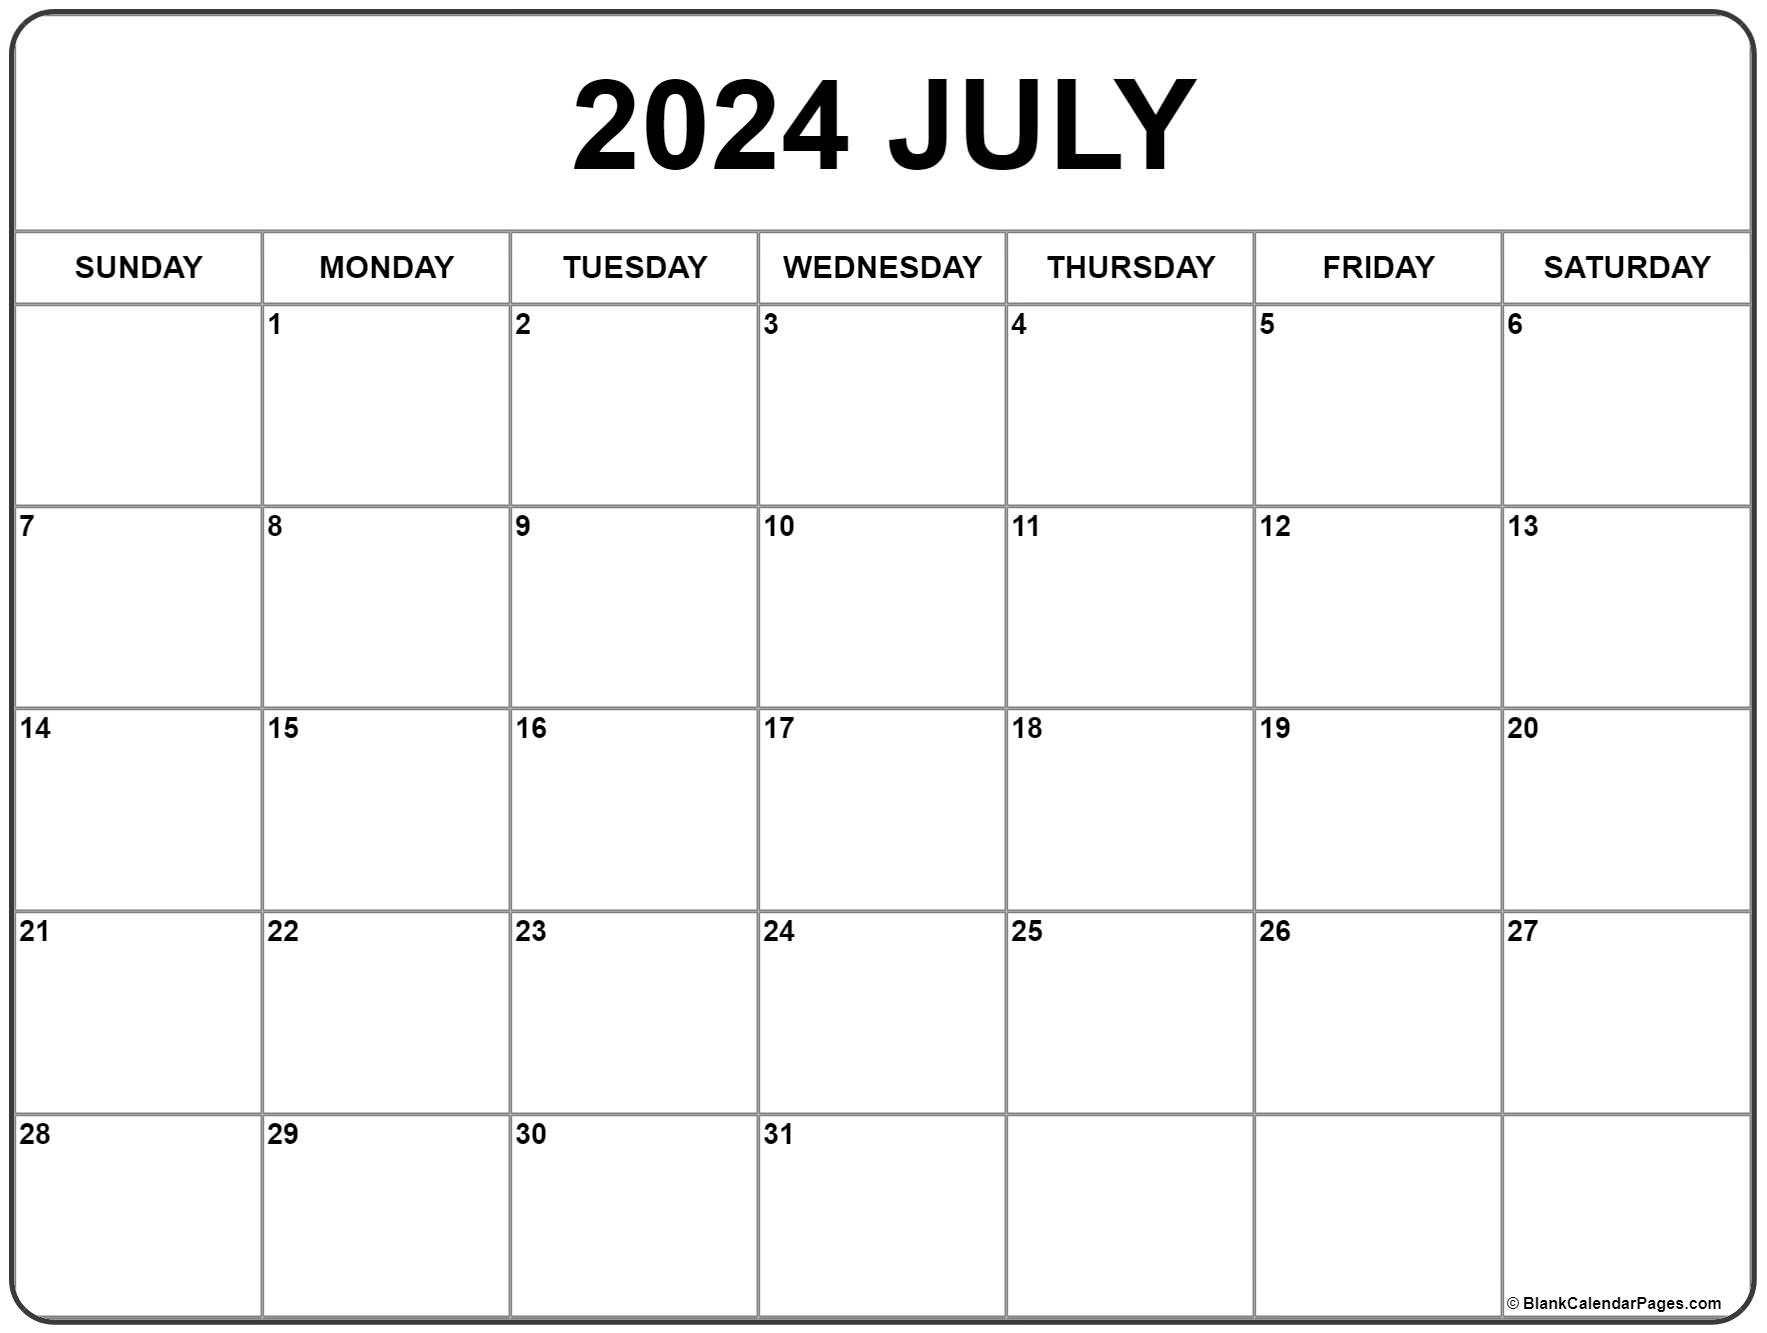 July 2024 Calendar | Free Printable Calendar for 2024 July Calendar Template